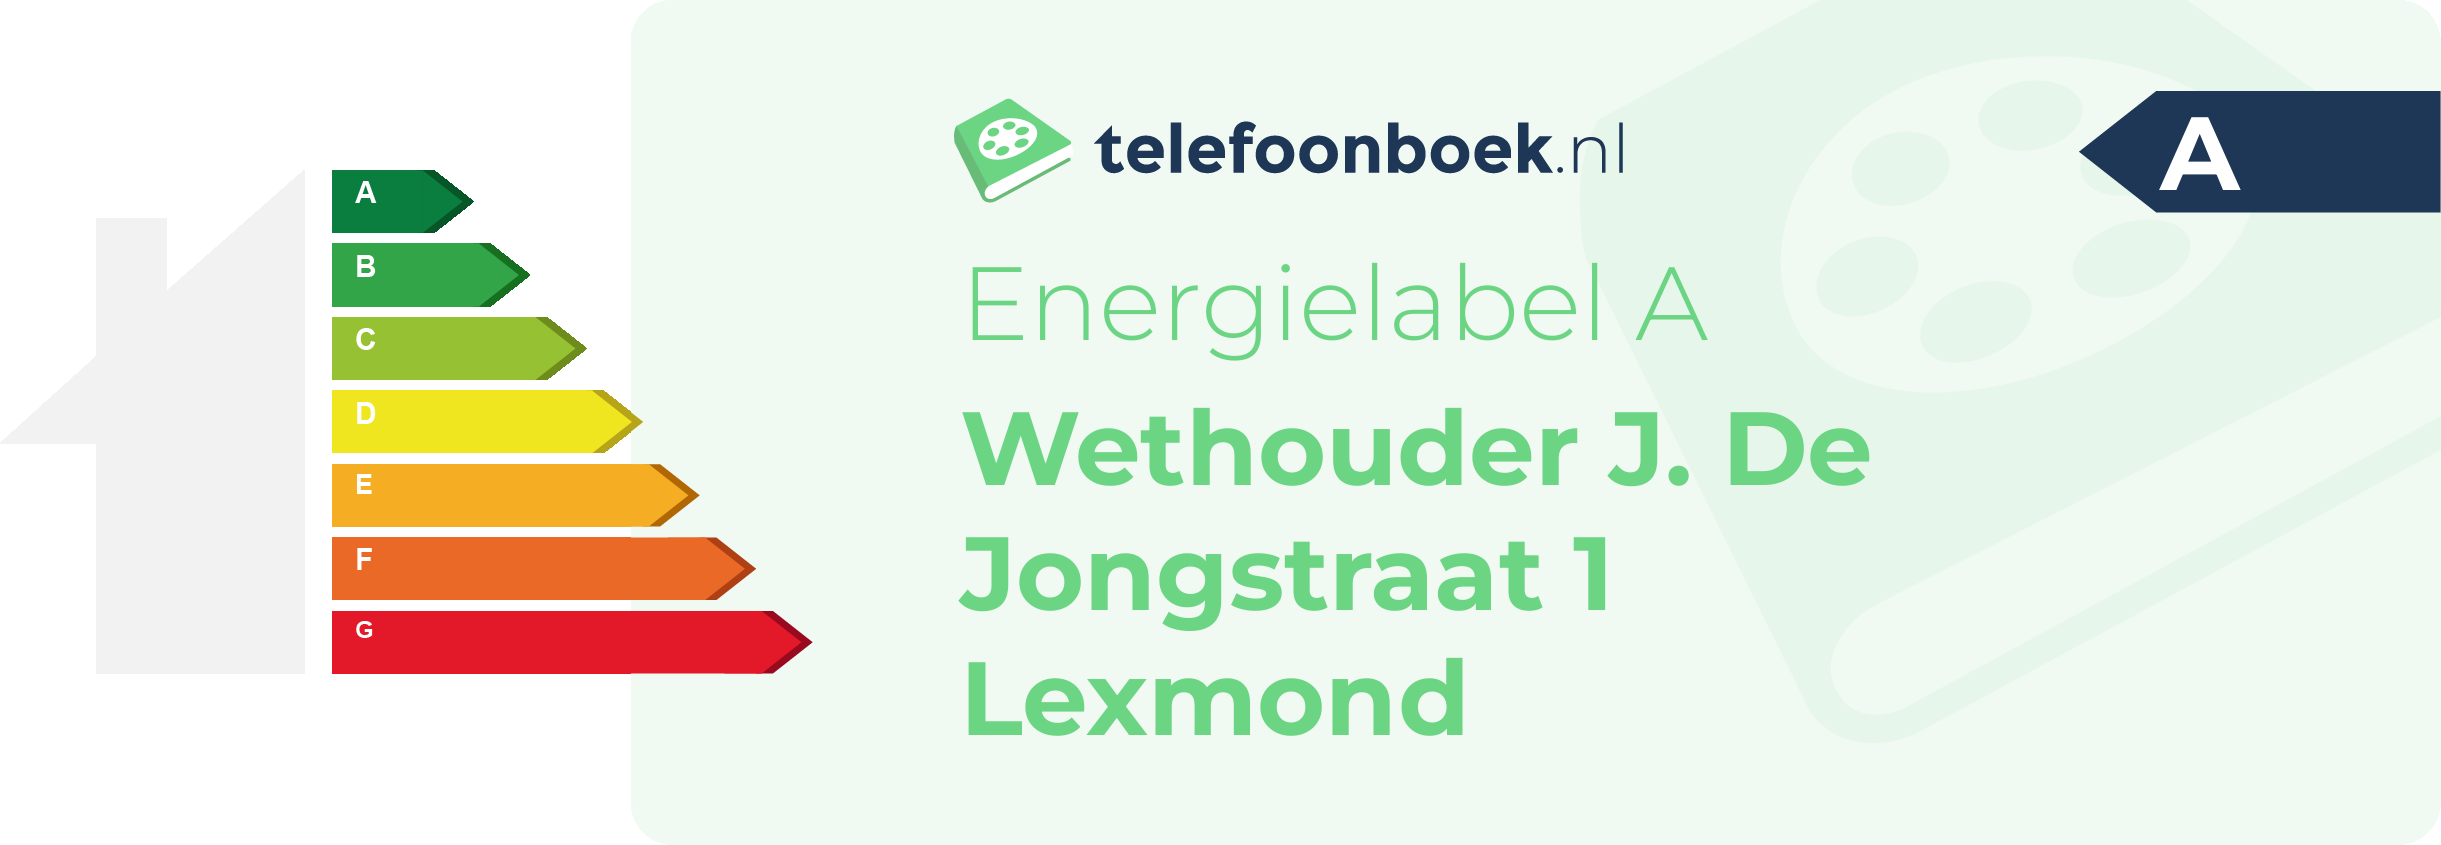 Energielabel Wethouder J. De Jongstraat 1 Lexmond